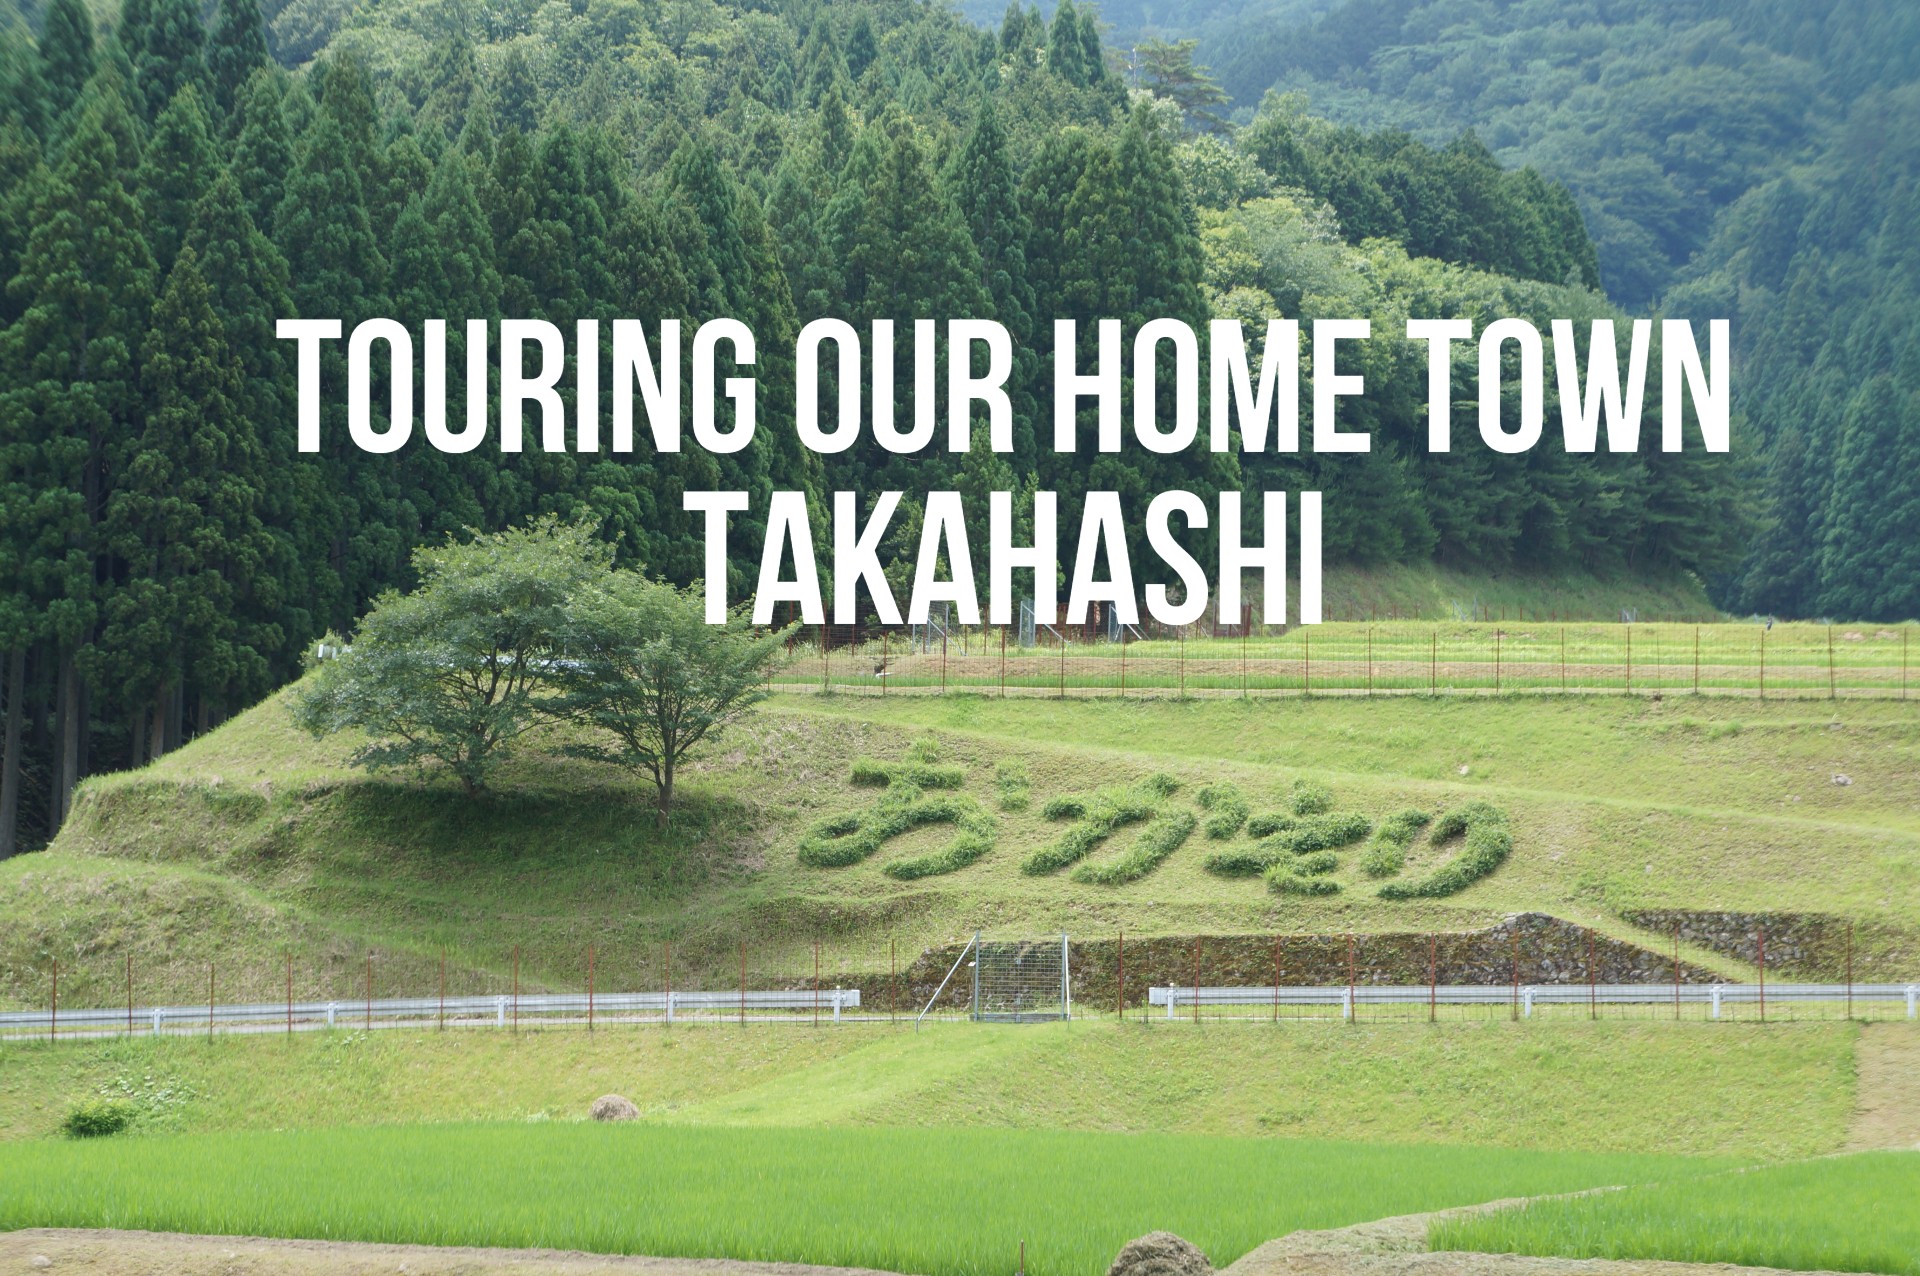 Touring our home town Takahashi